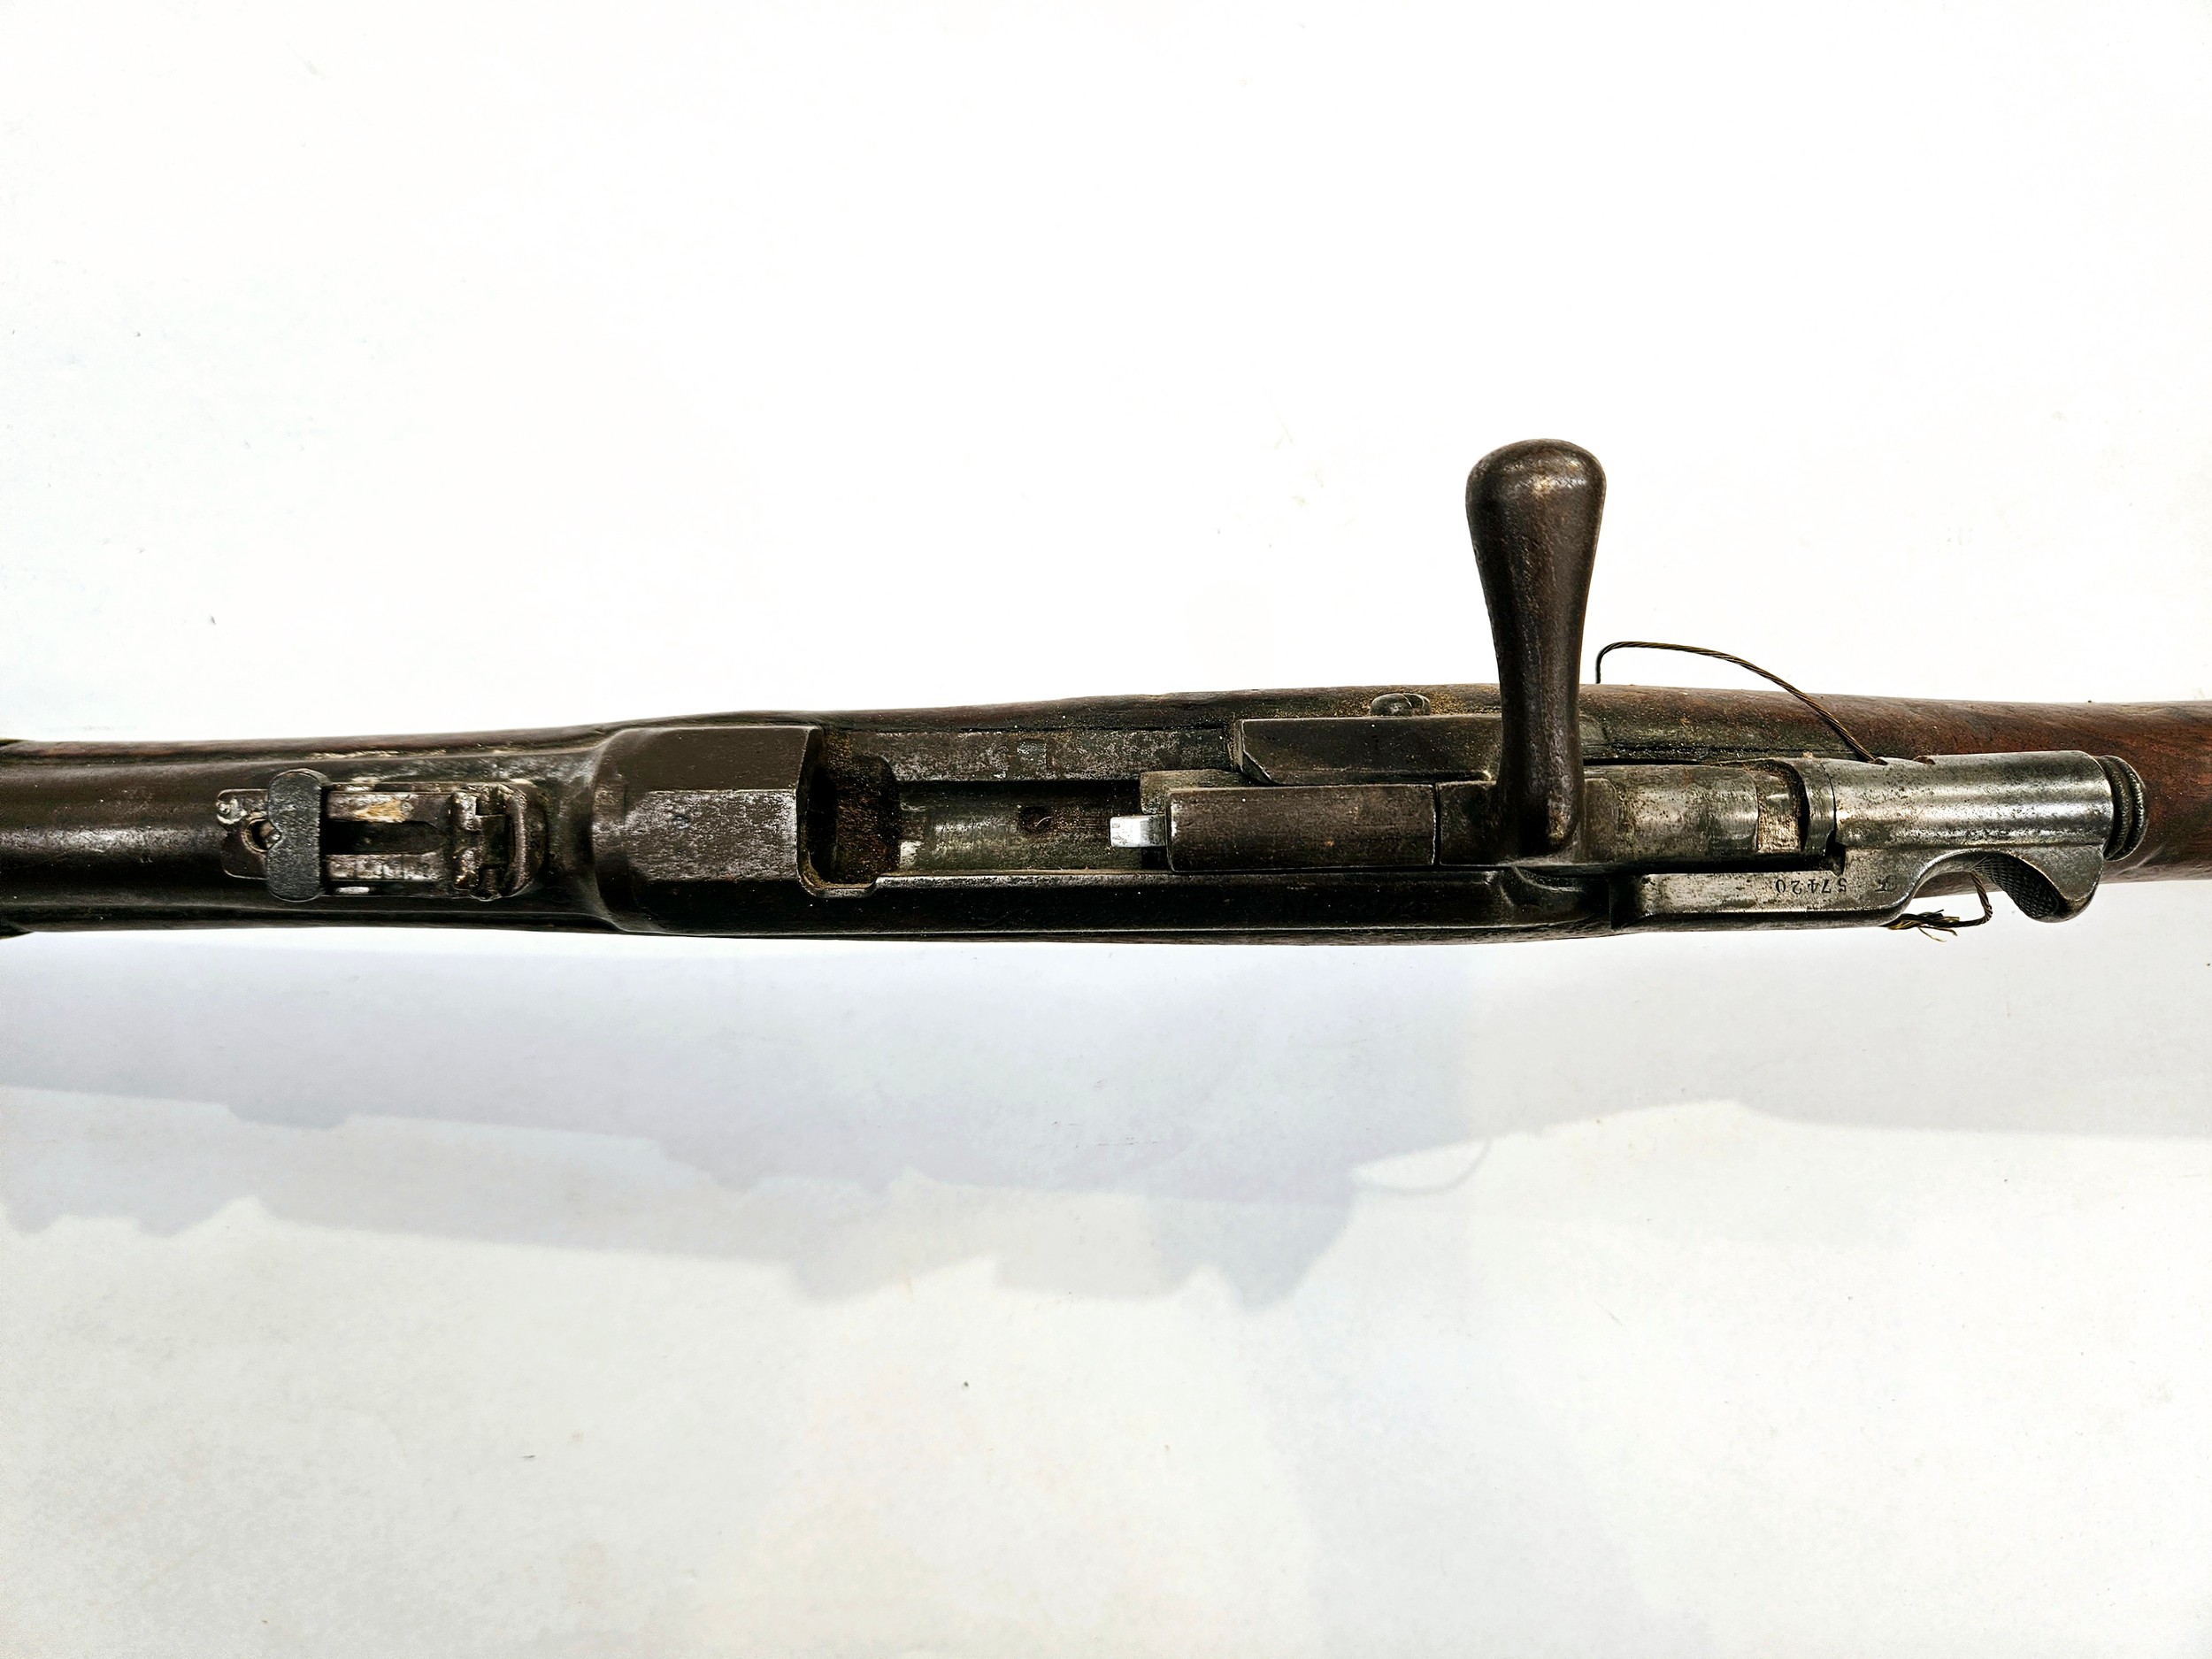 A Fusil Gras mle 1874 rifle, 11x59mmR Gras calibre, obsolete calibre. No license required - Image 7 of 8